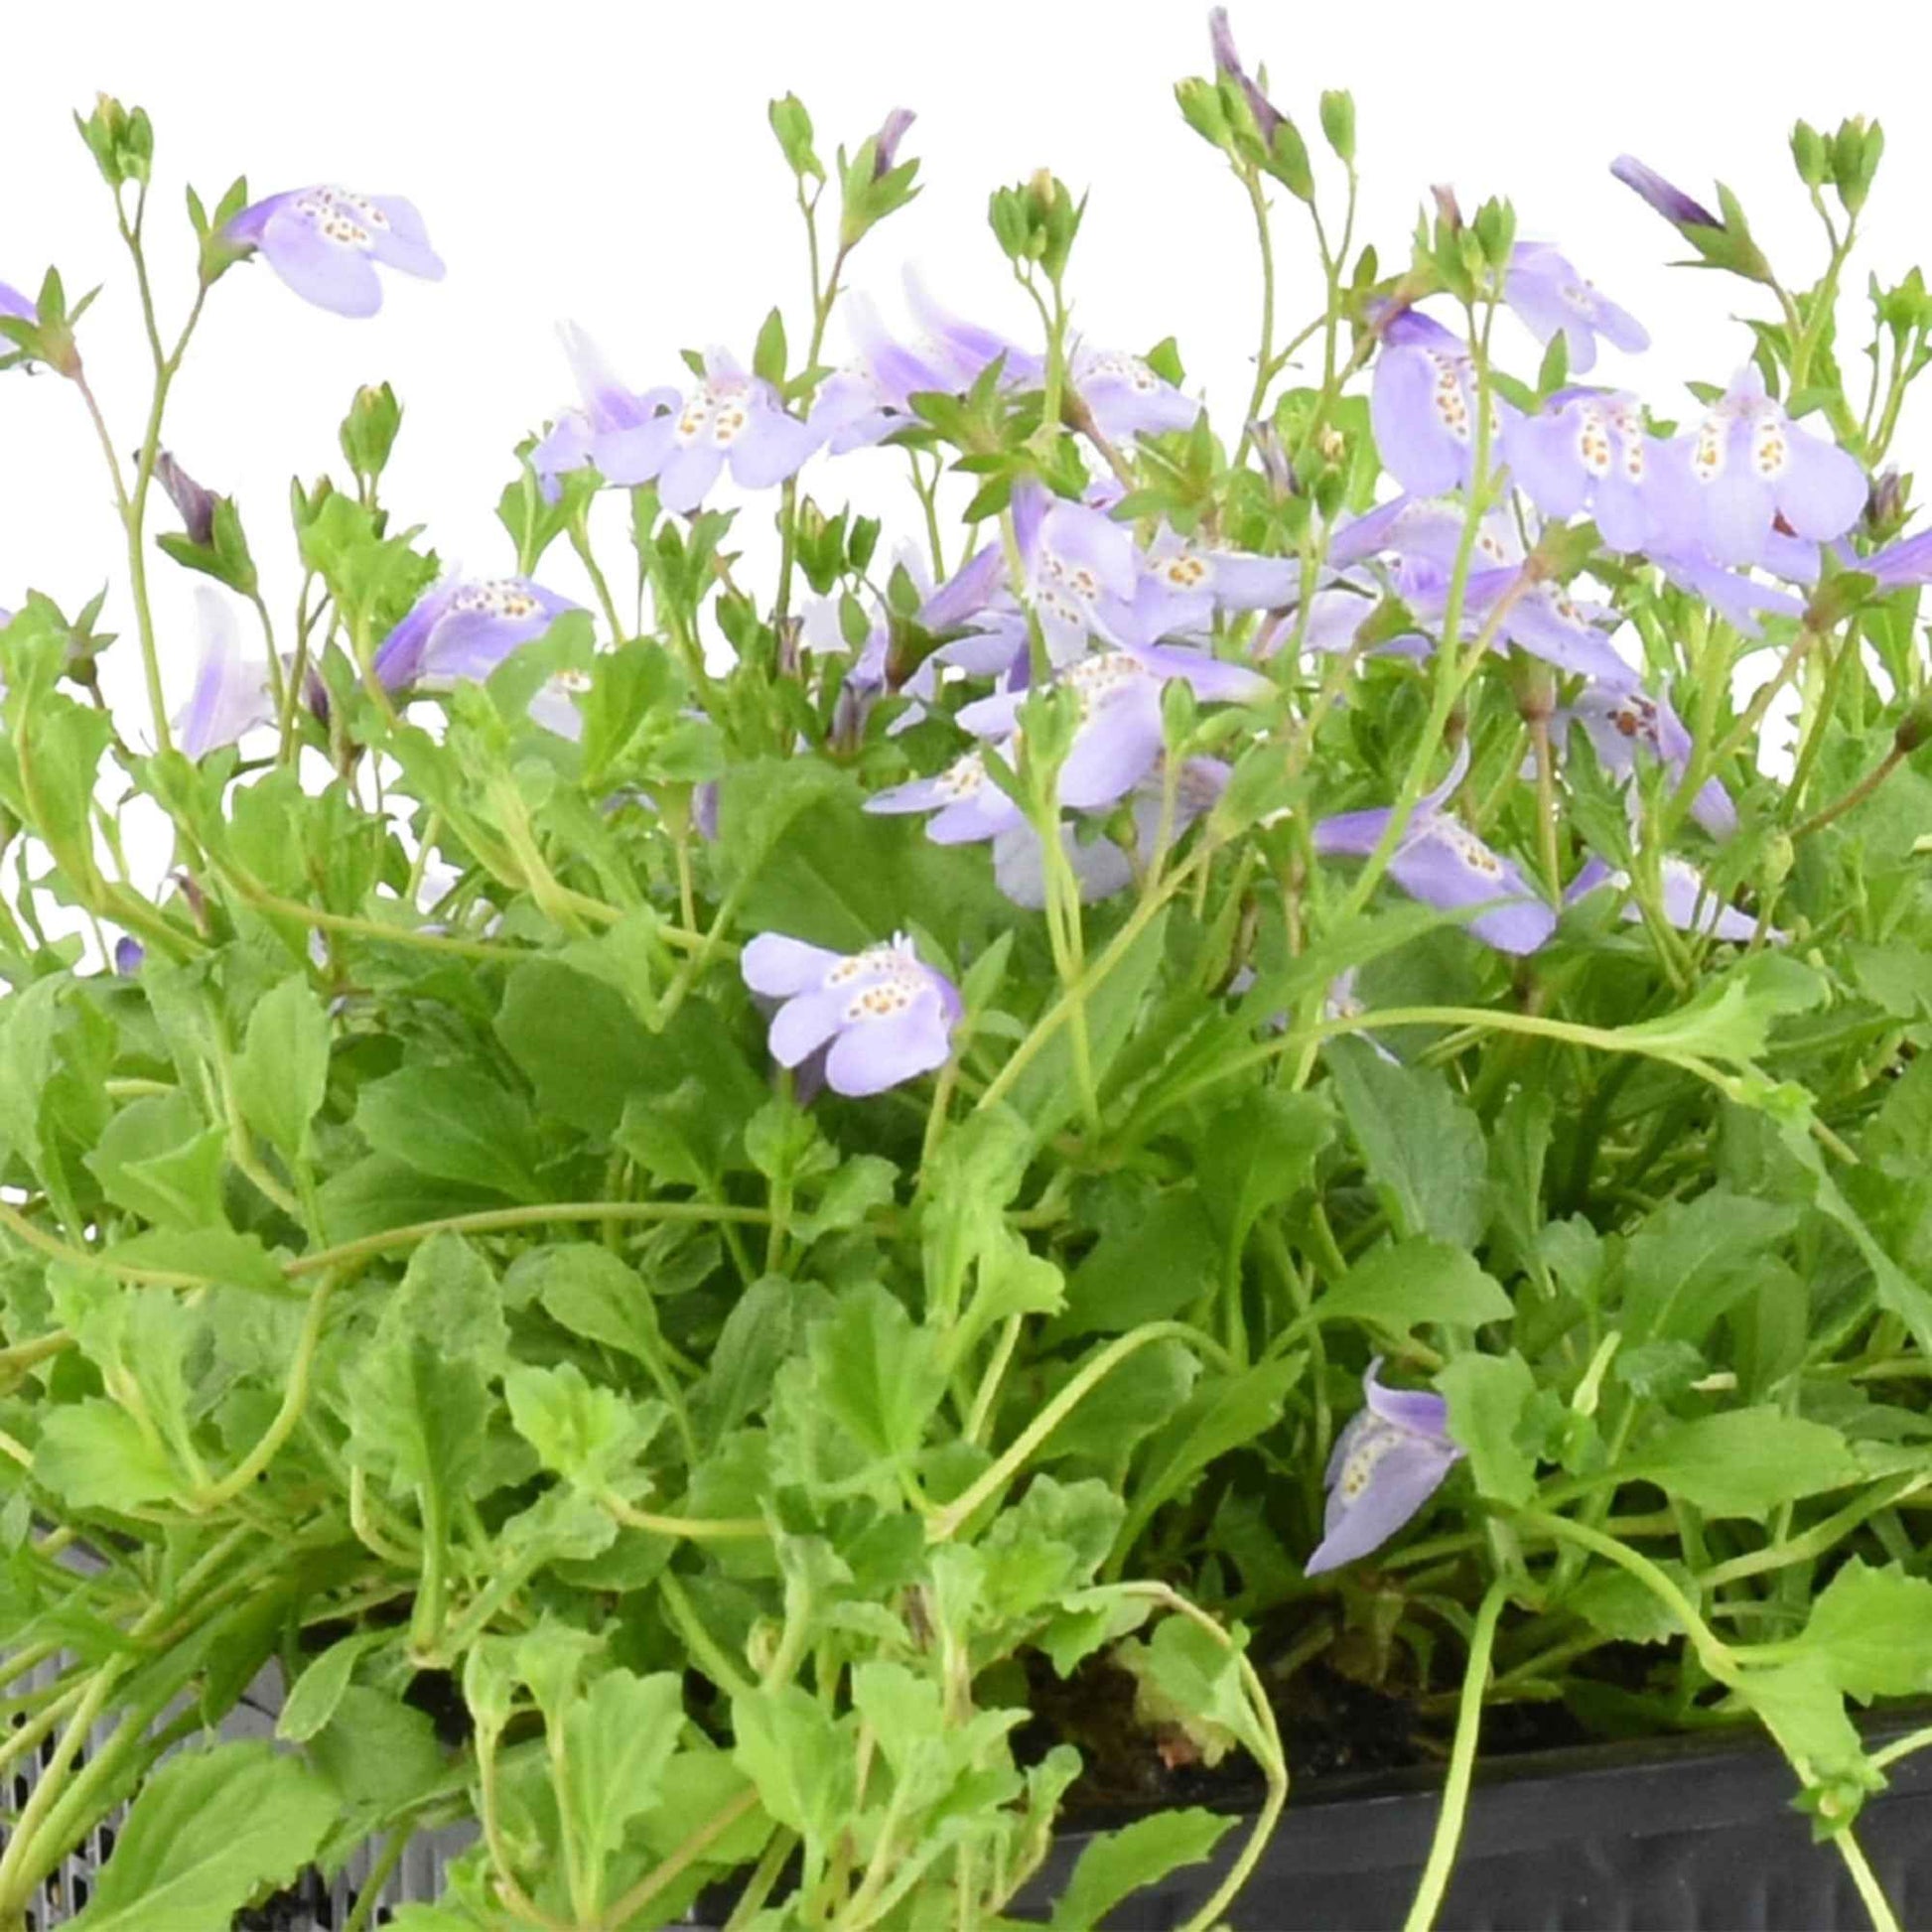 Mazus reptans 'Blue' violet - Plantes de bassin